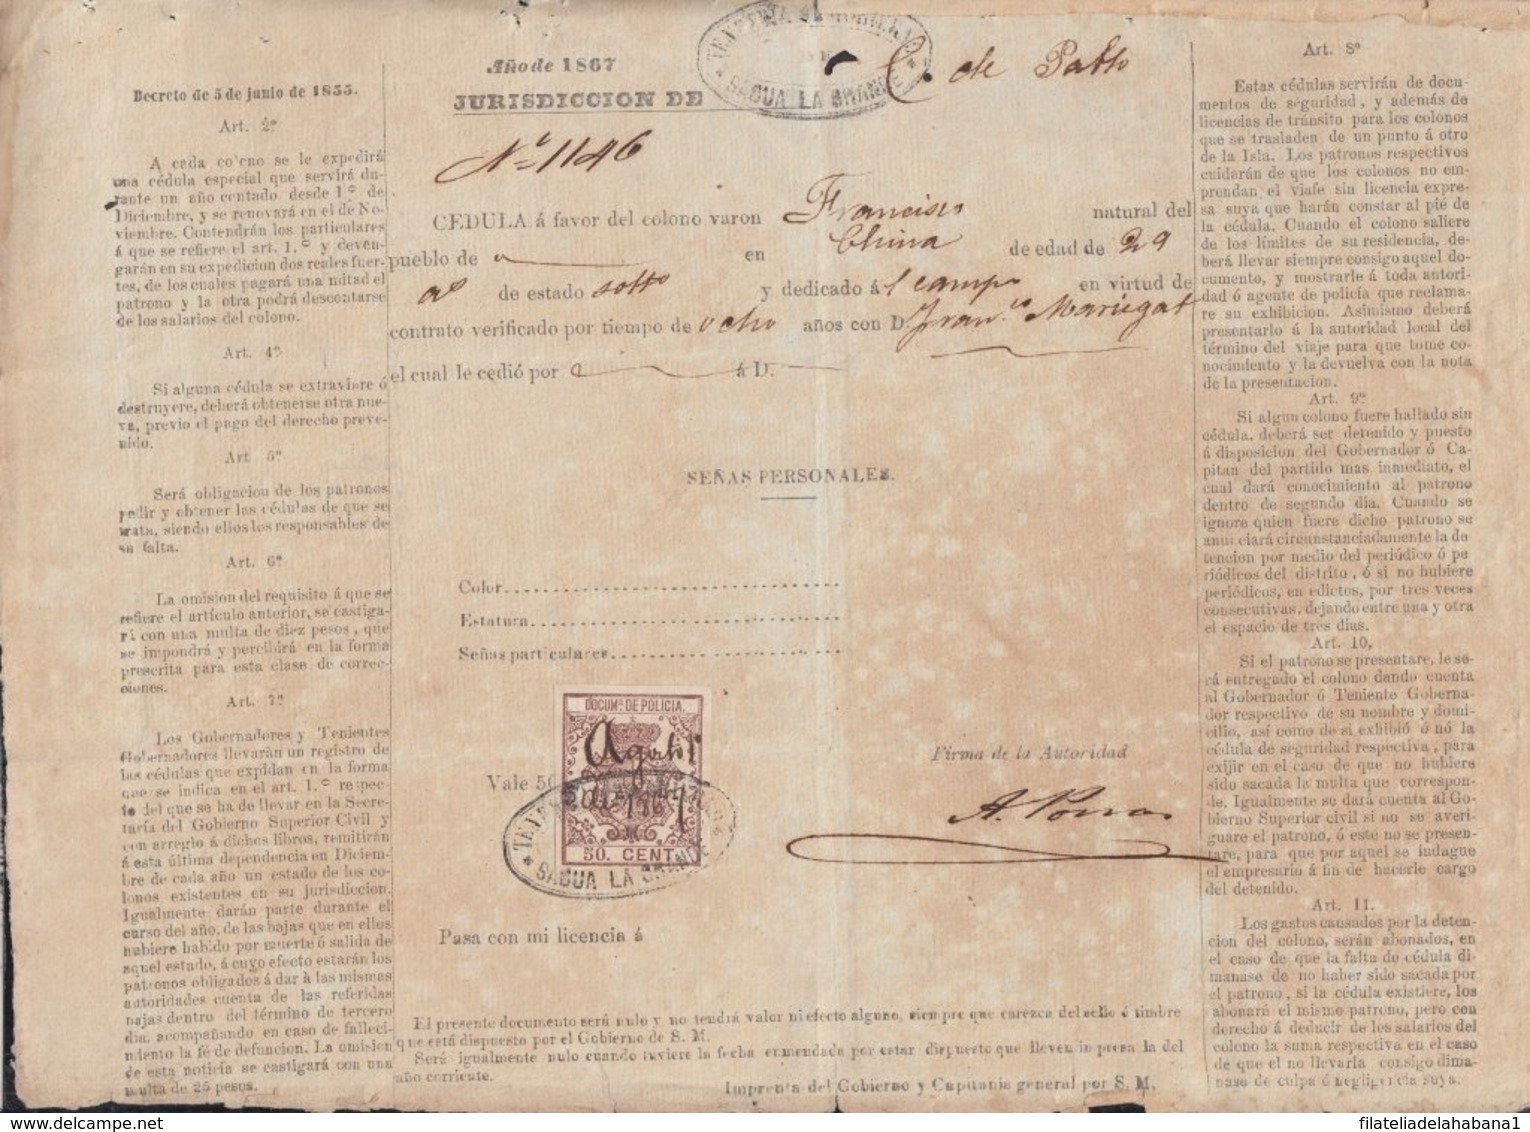 POL-80 CUBA (LG1538) SPAIN ANT.CHINA SLAVE COLONO CEDULA + REVENUE POLICE STAMP 1867. - Impuestos